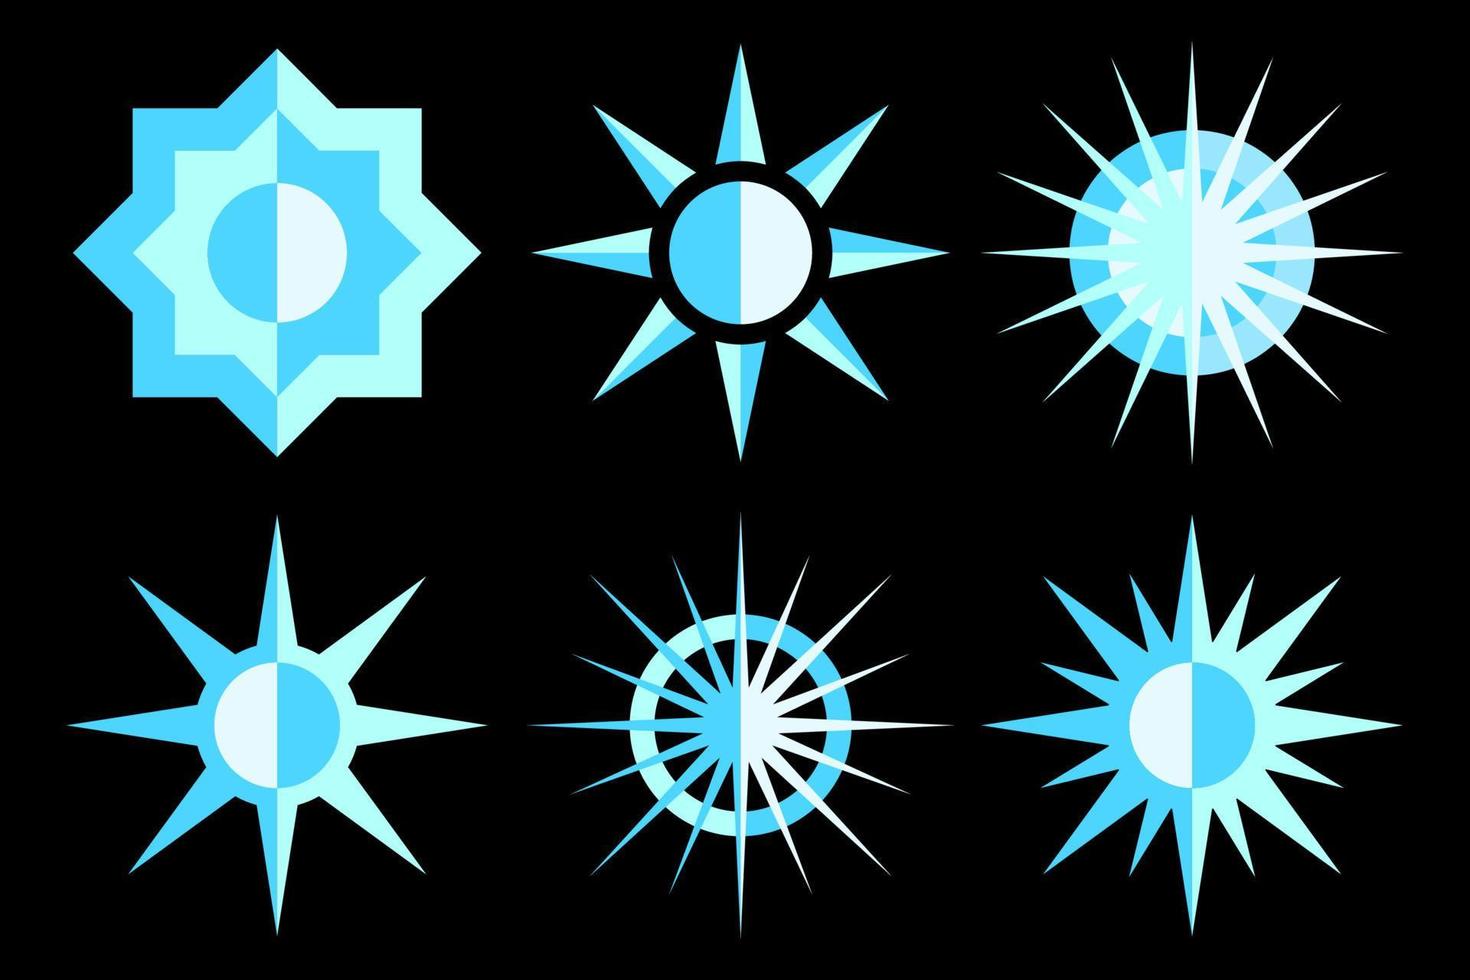 stel lichtblauwe sterren platte cartoonstijl geïsoleerde zwarte achtergrond in vector